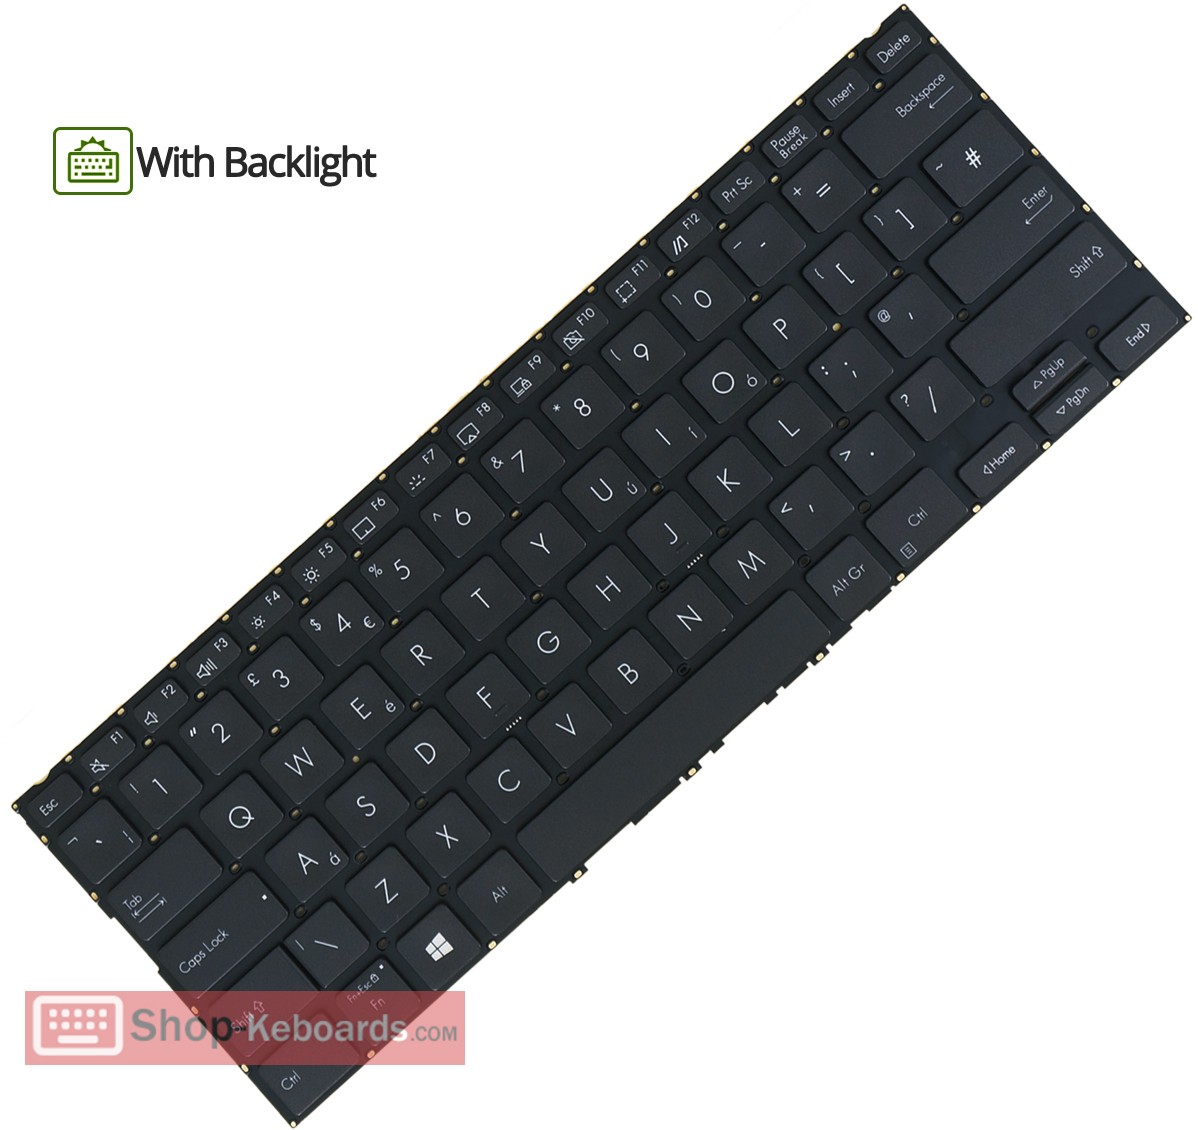 Asus 0KNB0-262VJP00  Keyboard replacement